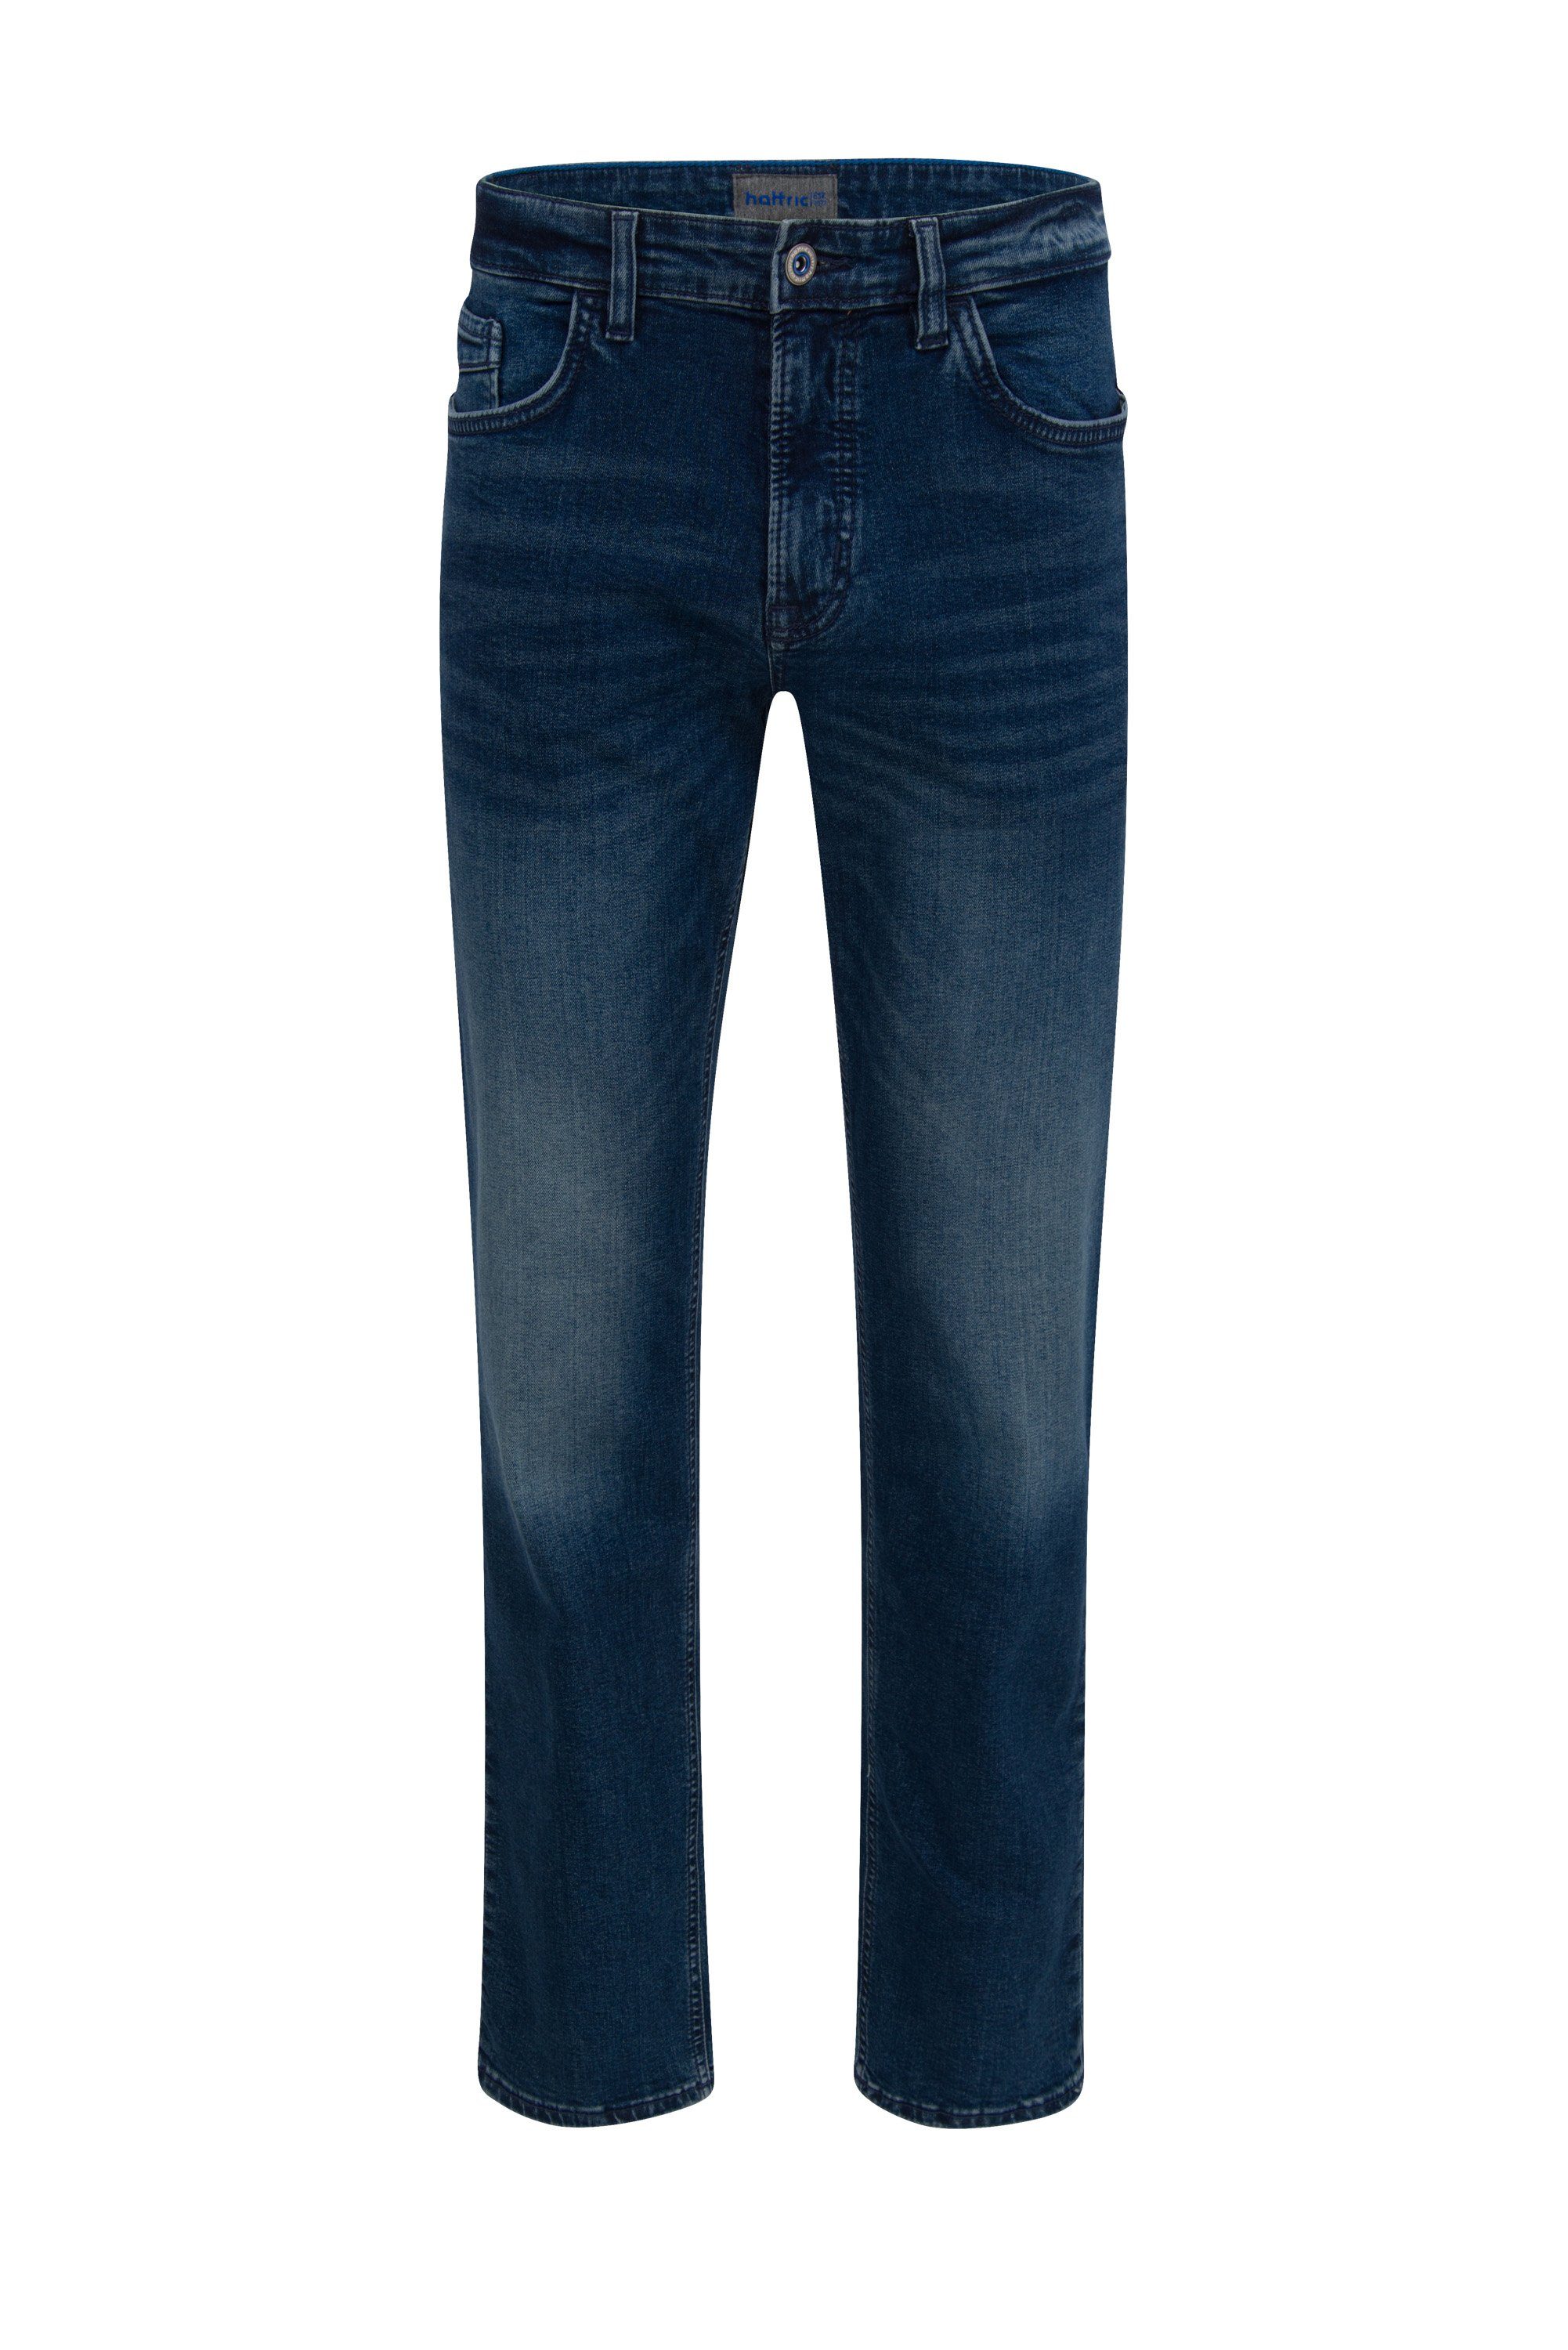 Hattric 5-Pocket-Jeans HATTRIC HUNTER dark blue stone 688465 6350.48 -  HIGH-STRETCH